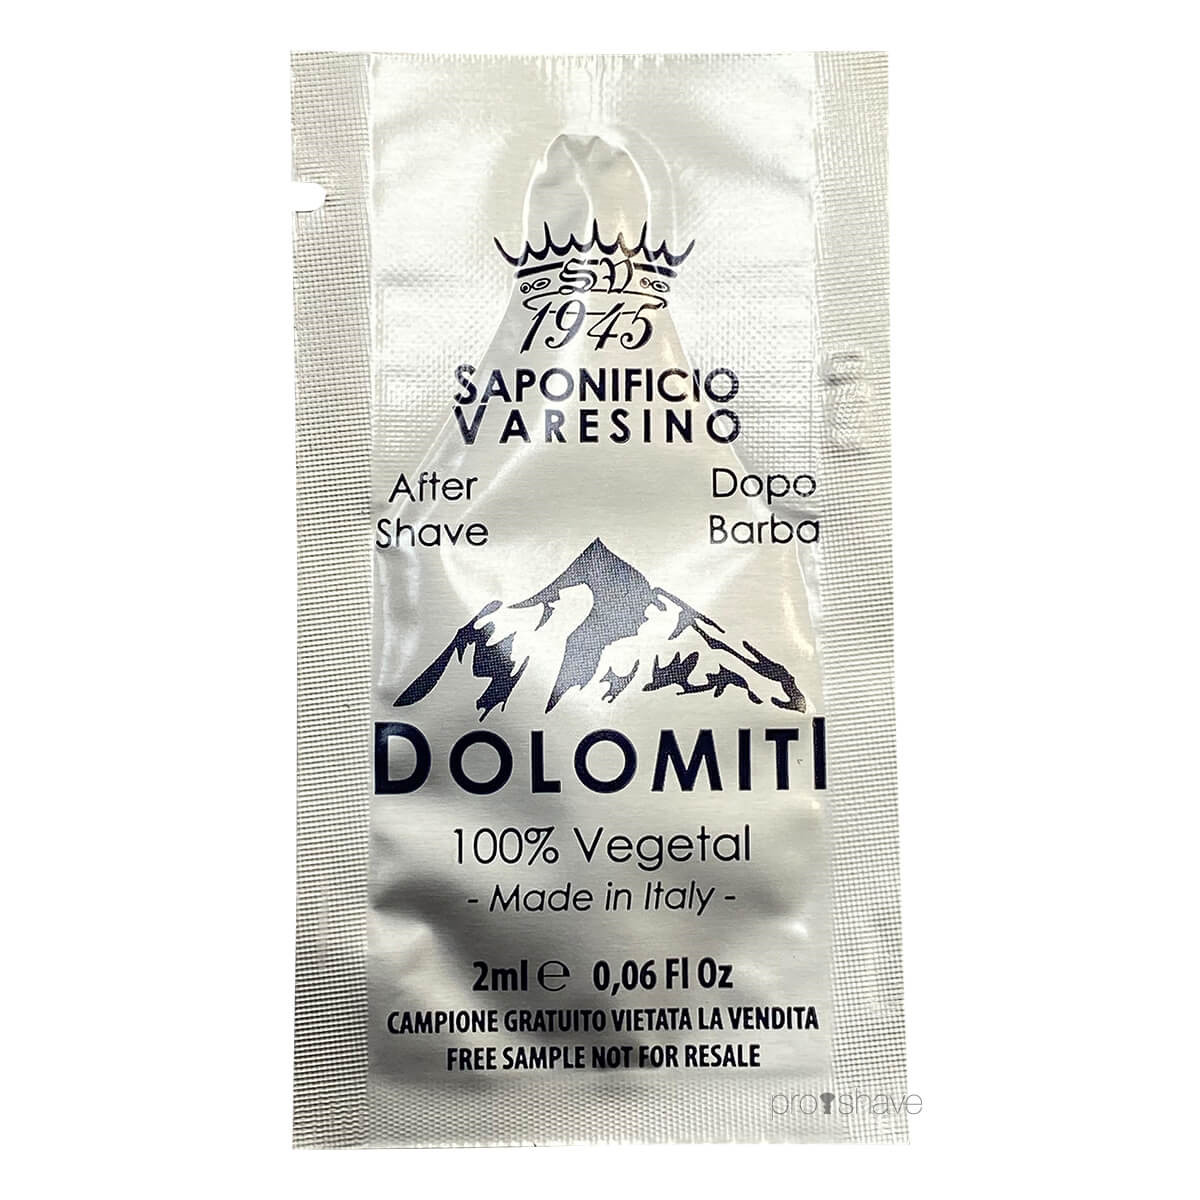 Saponificio Varesino Aftershave, Dolomiti, SAMPLE, 2 ml.